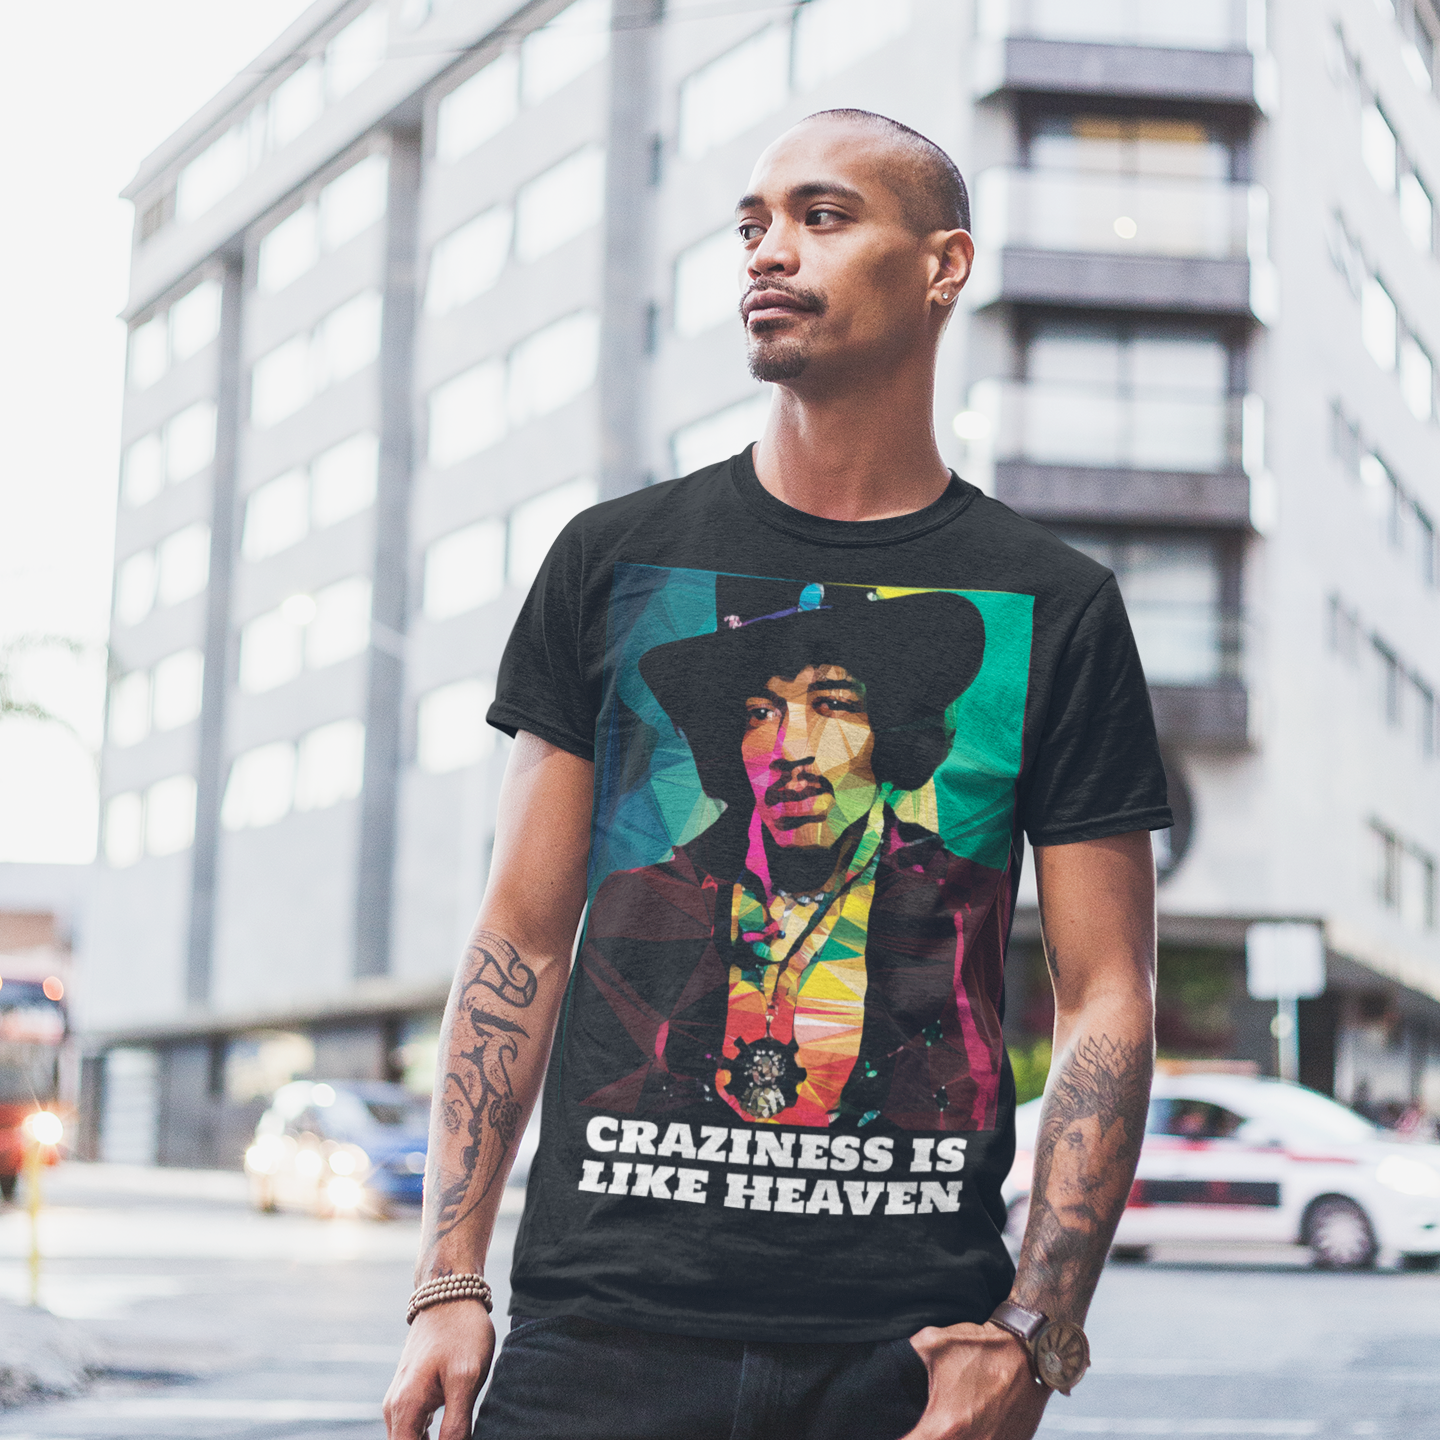 Jimi Hendrix by Baiba Auria: Short-Sleeve Unisex T-Shirt - Egoiste Gallery - Art Gallery in Manchester City Centre